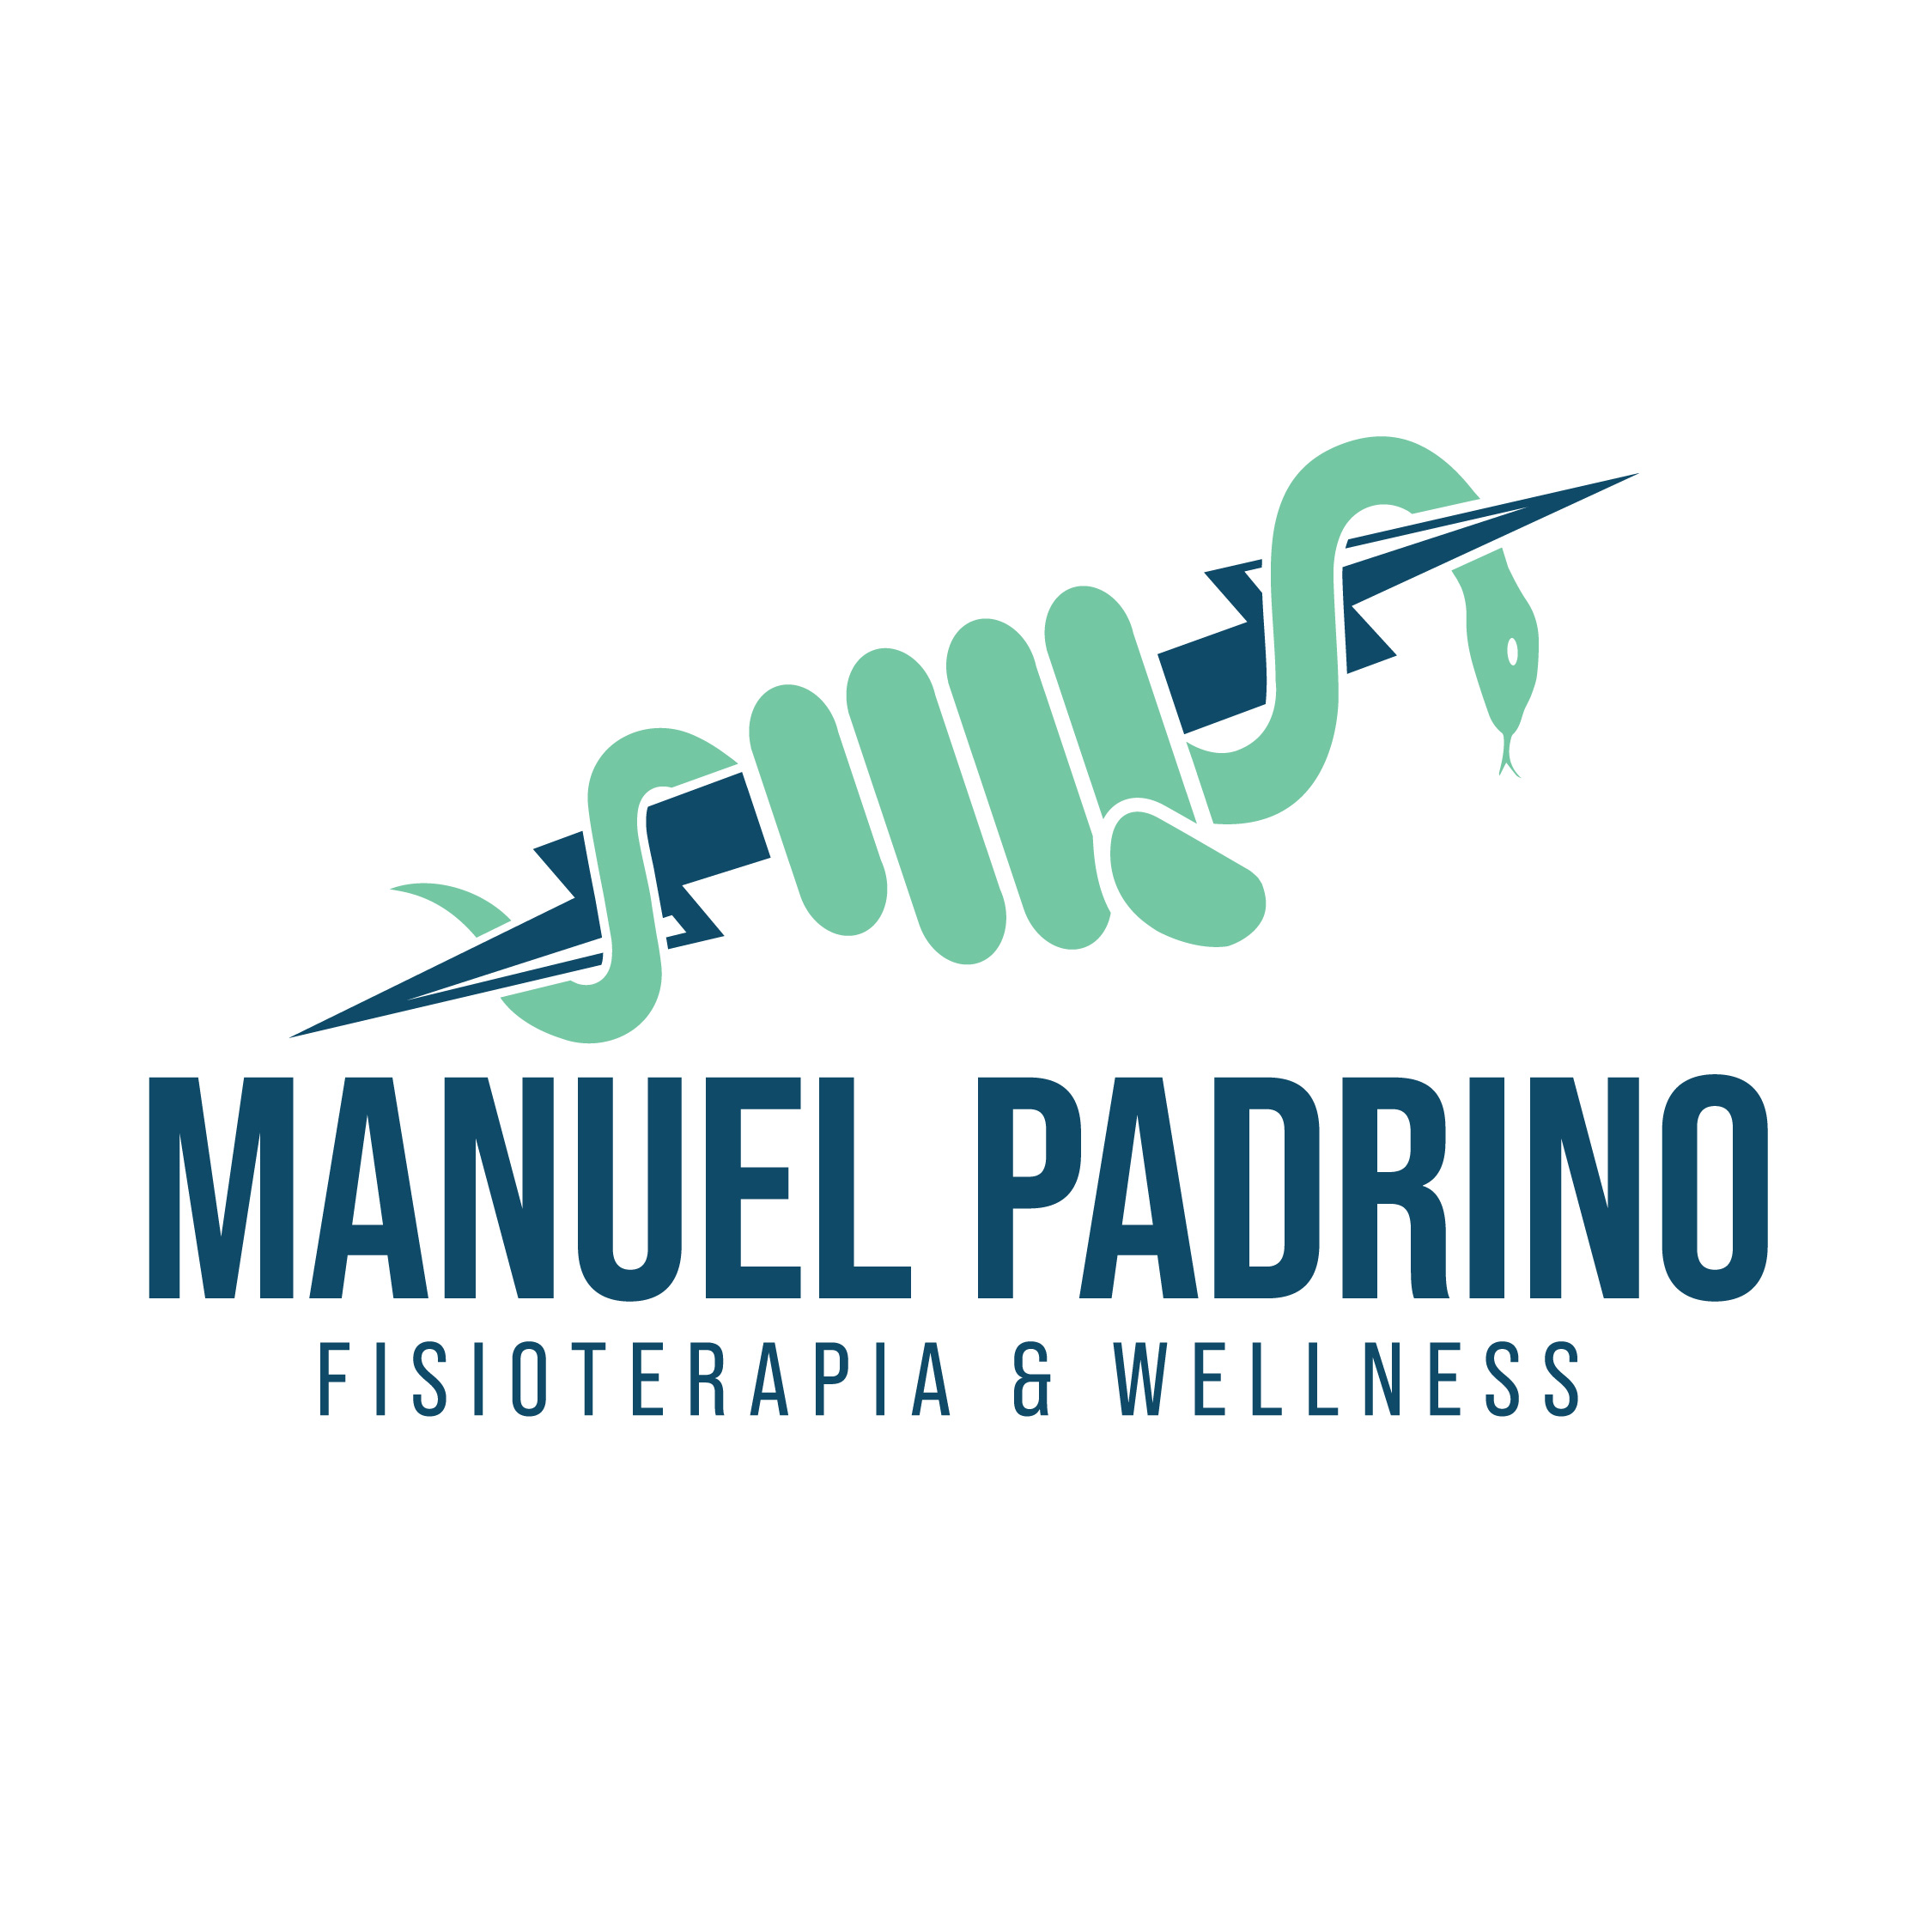 Manuel Padrino – Fisioterapia & Wellness